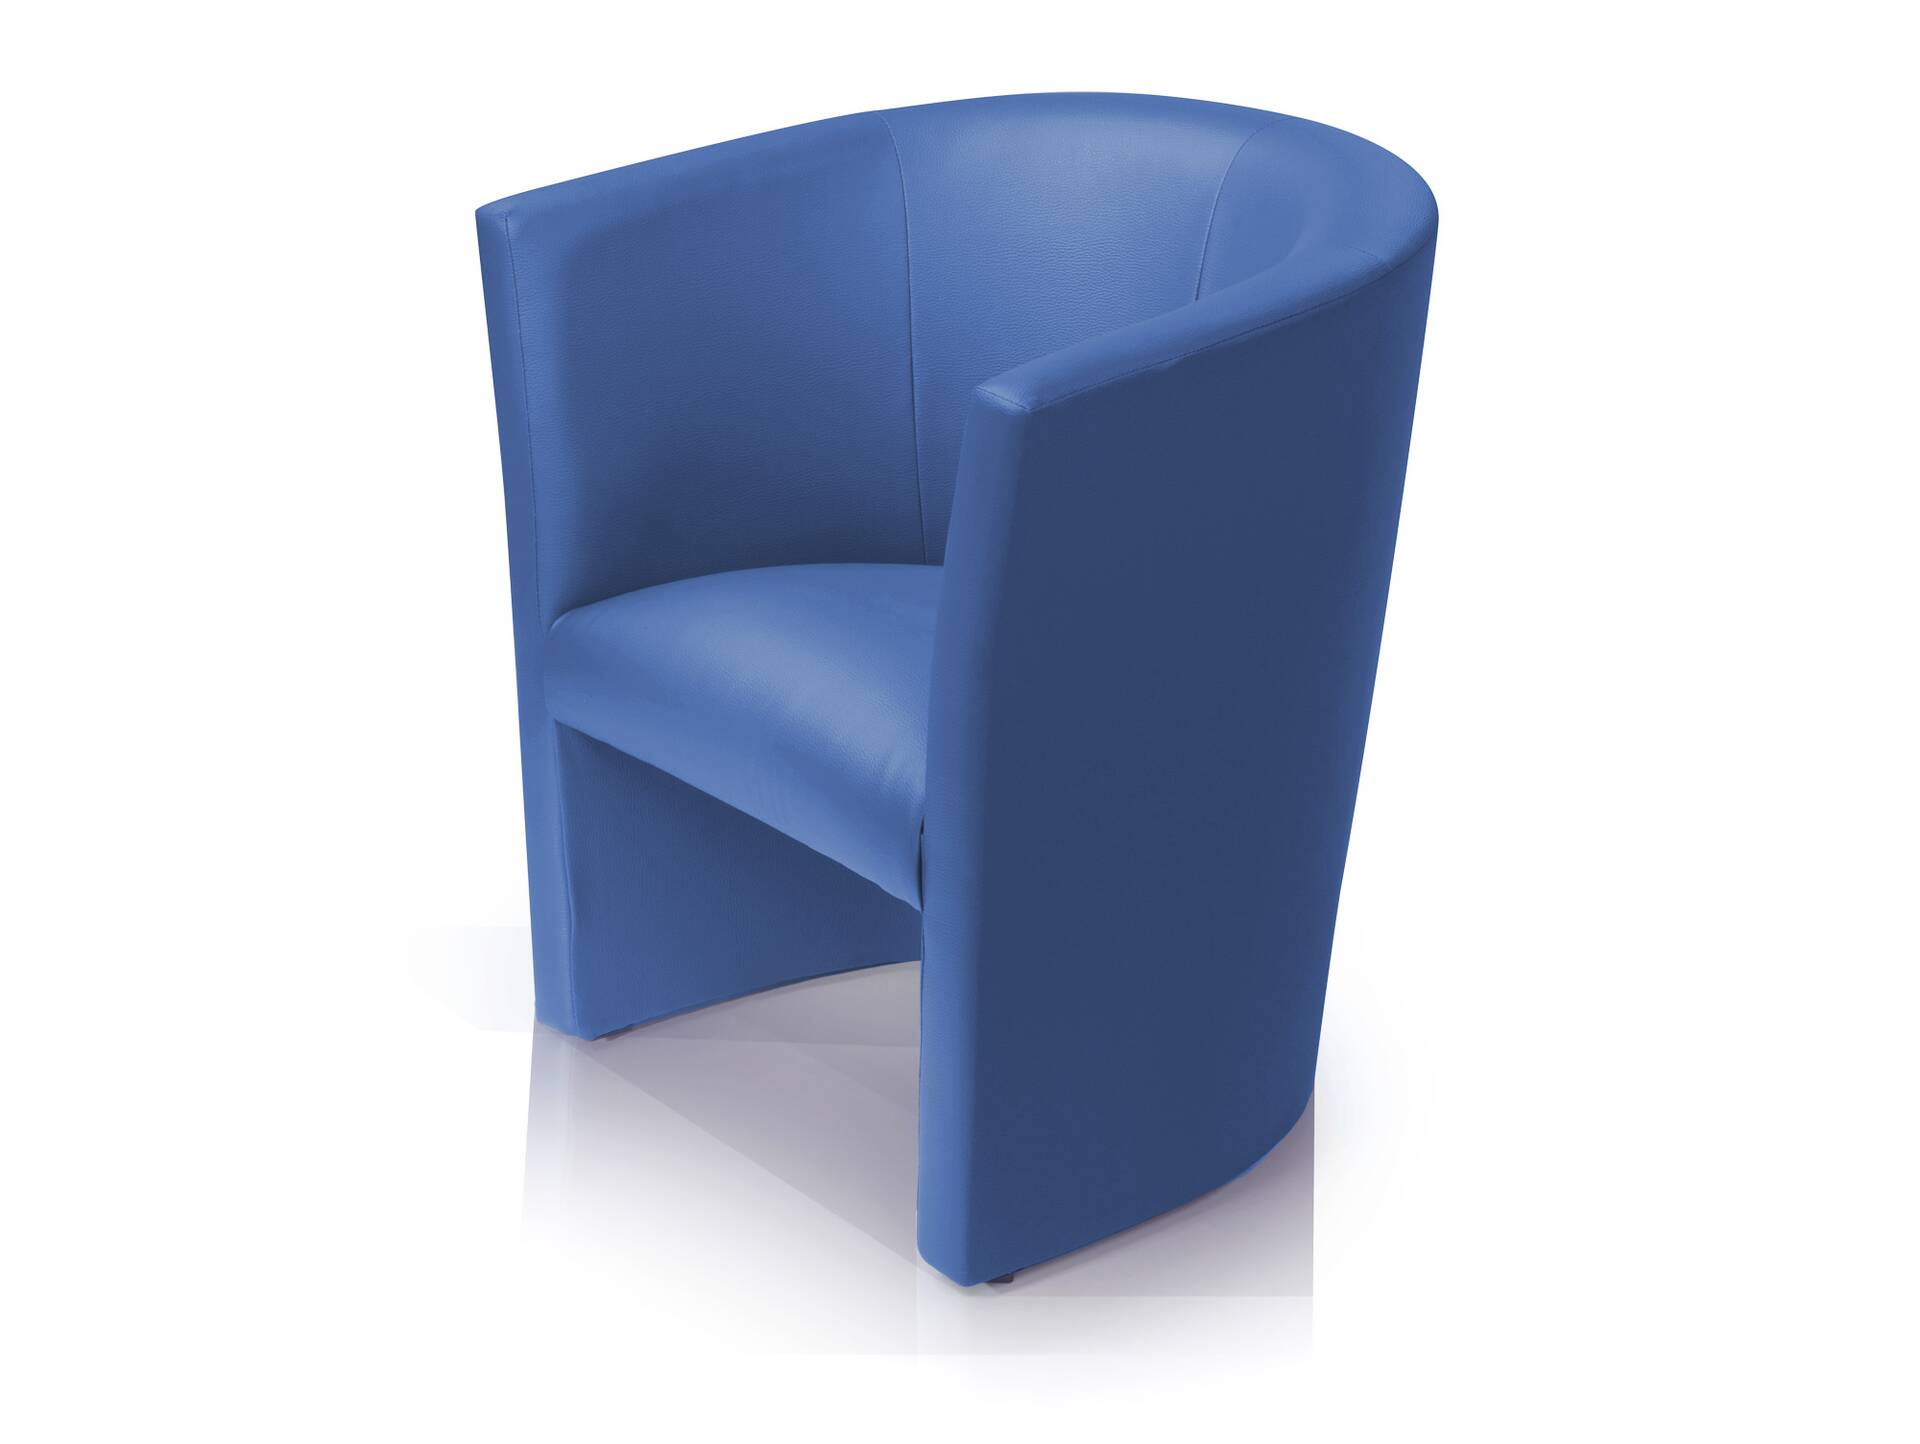 CHARLY Sessel / Cocktailsessel im Lederlook, Material Kunstleder blau